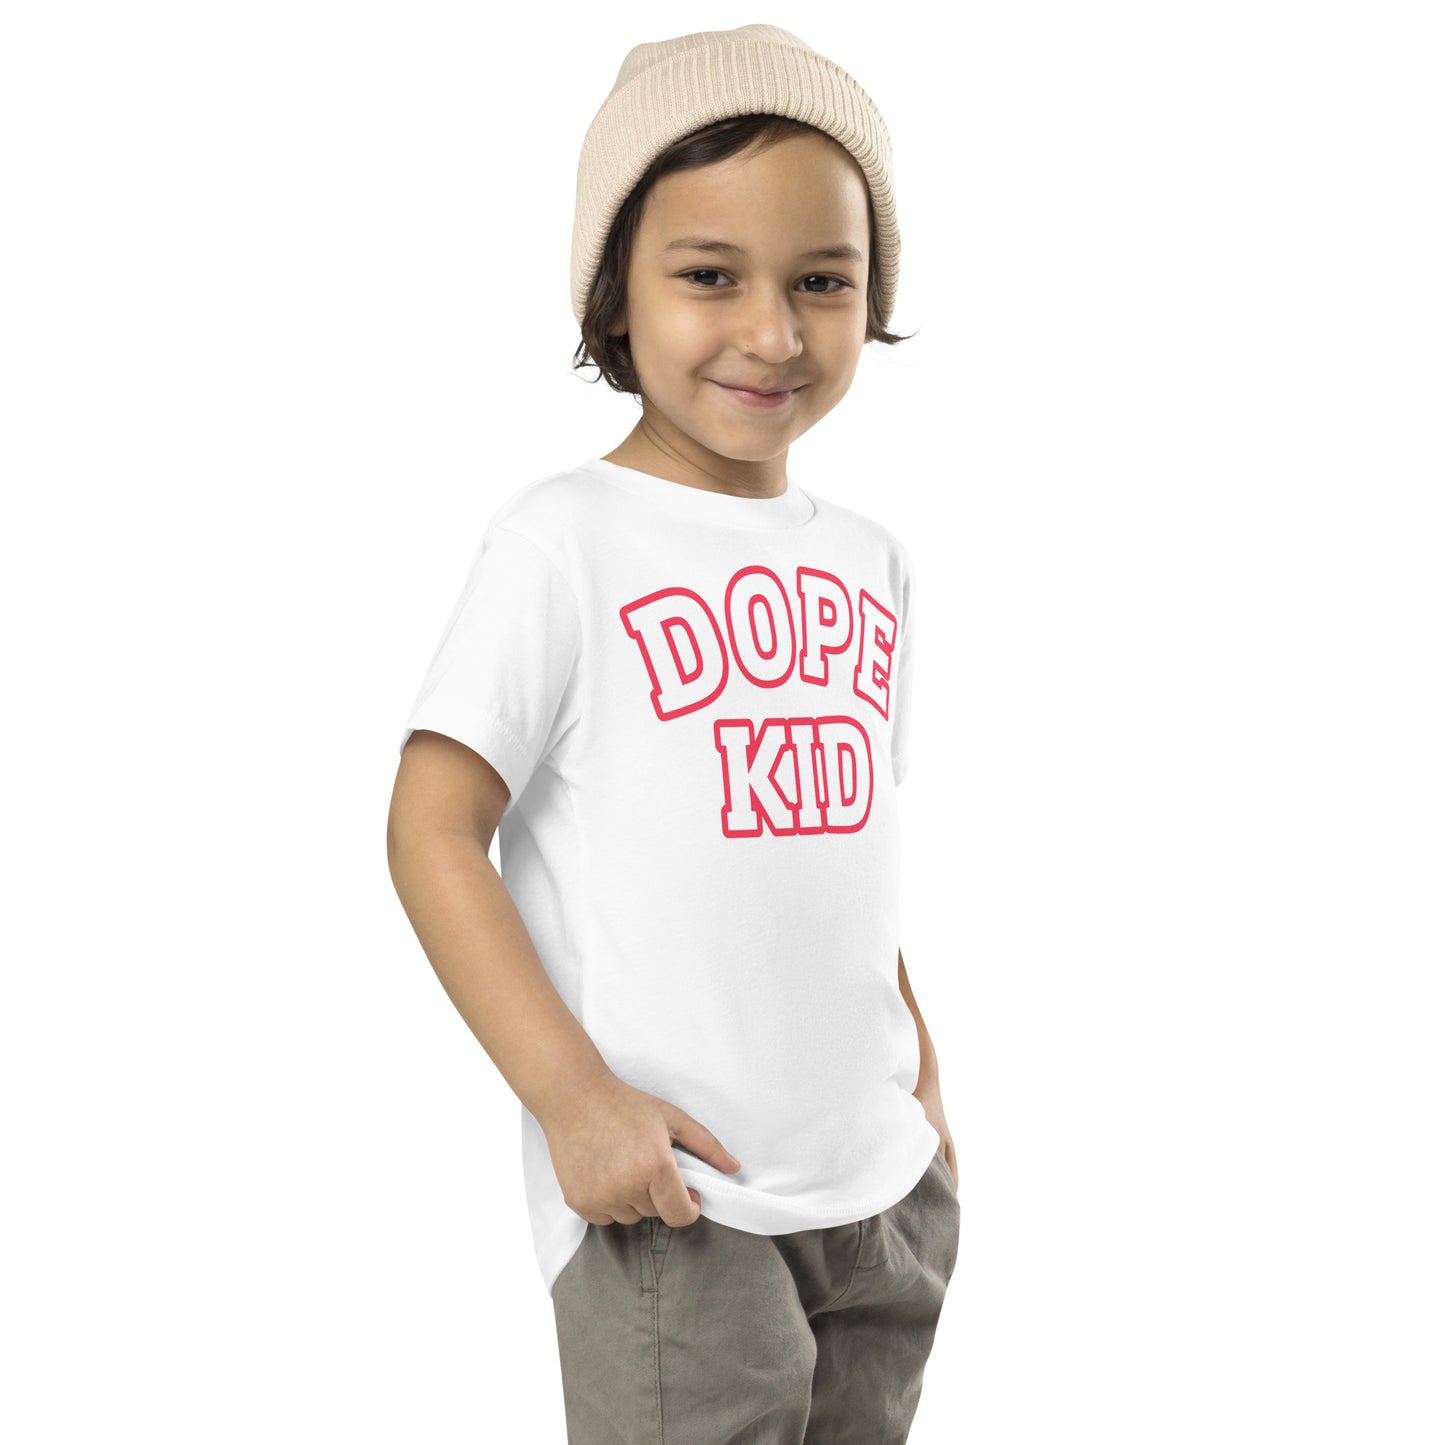 Dope Kid Toddler Short Sleeve T-Shirt